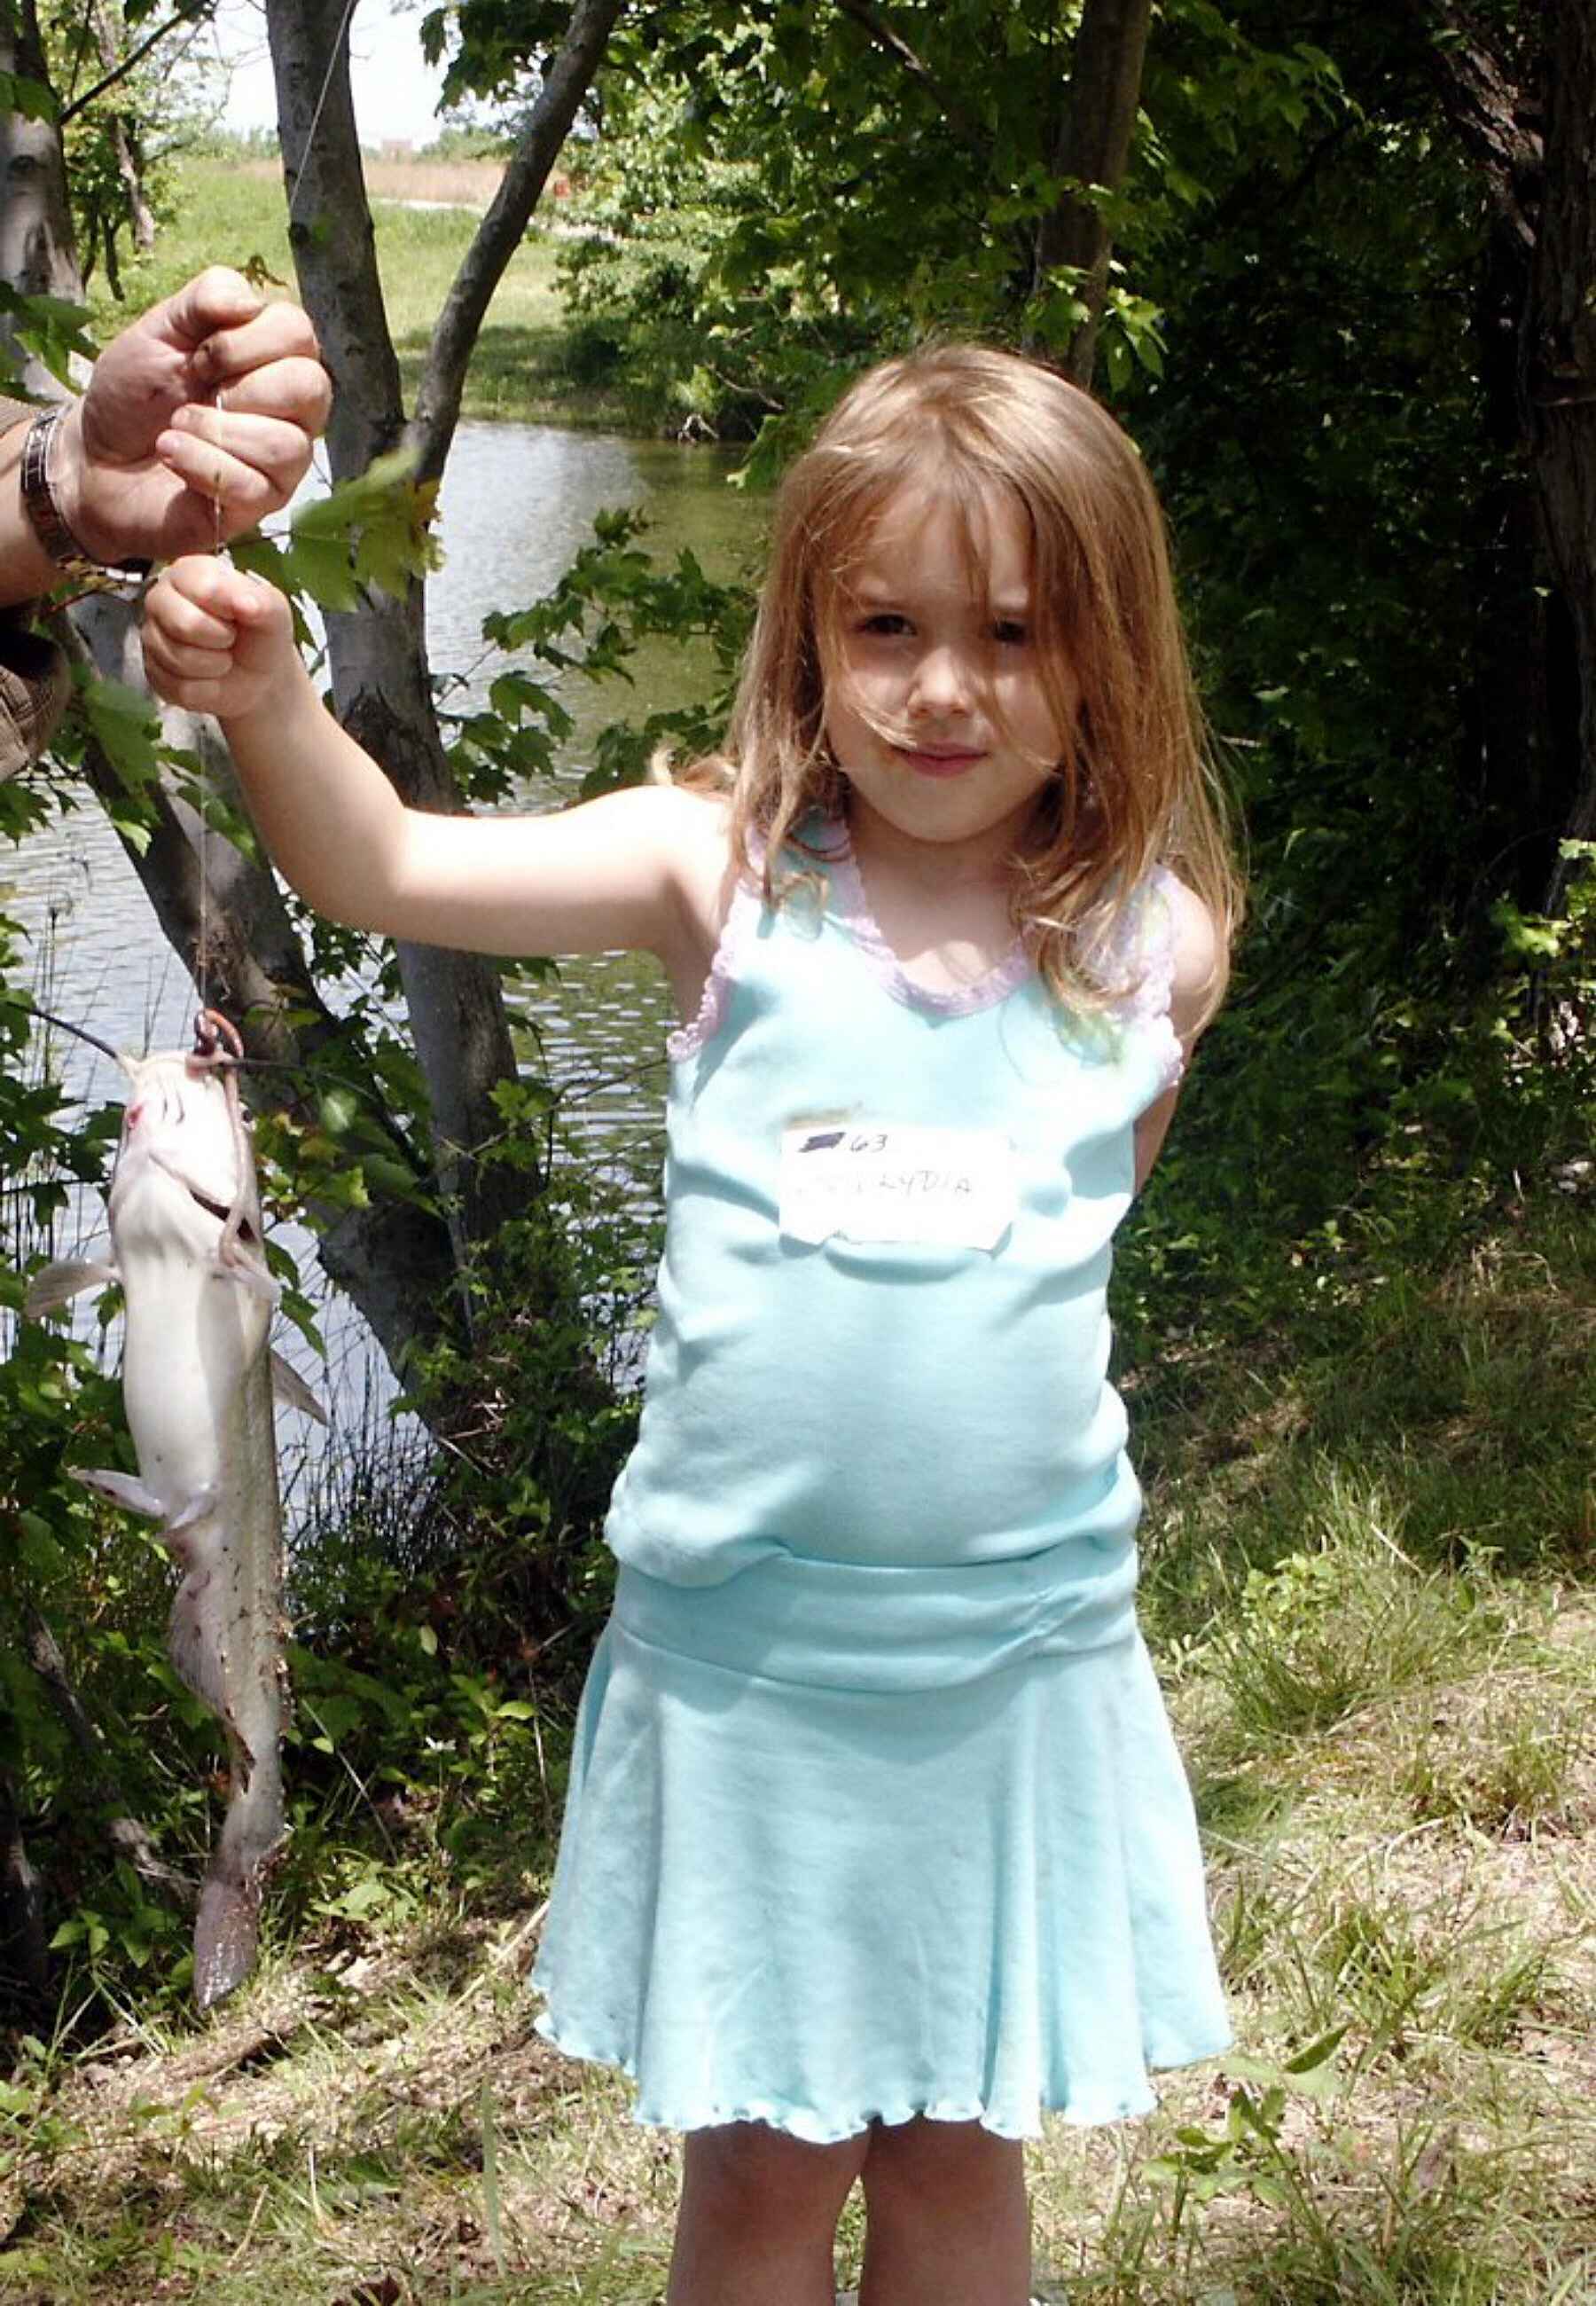 File:Cute little girl fishing.jpg - Wikimedia Commons